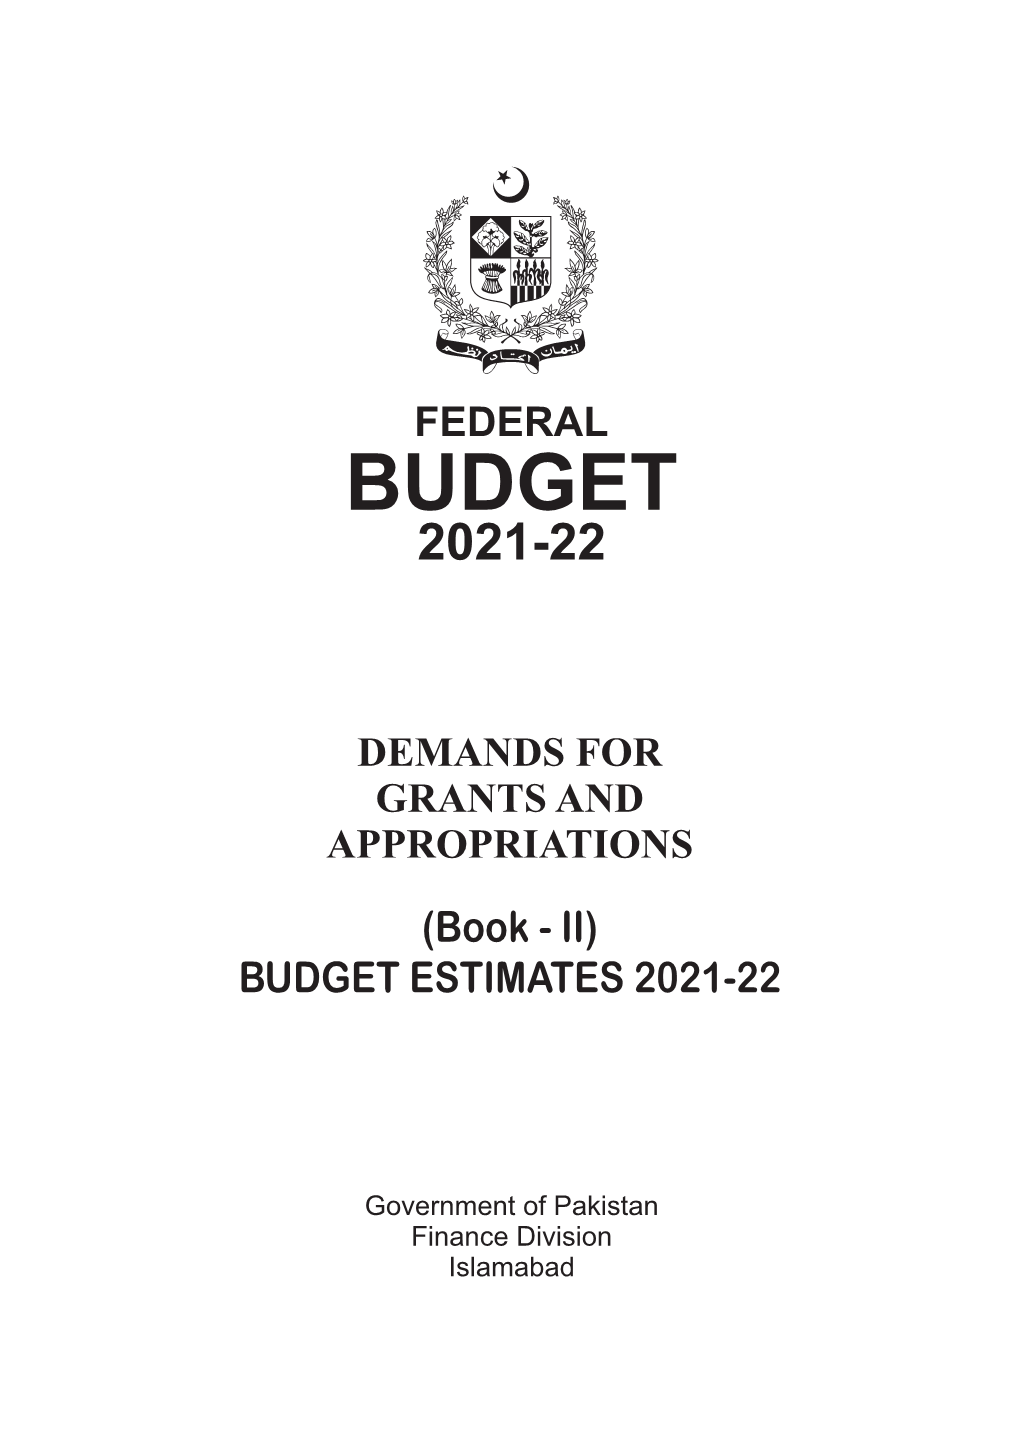 Budget 2021-22